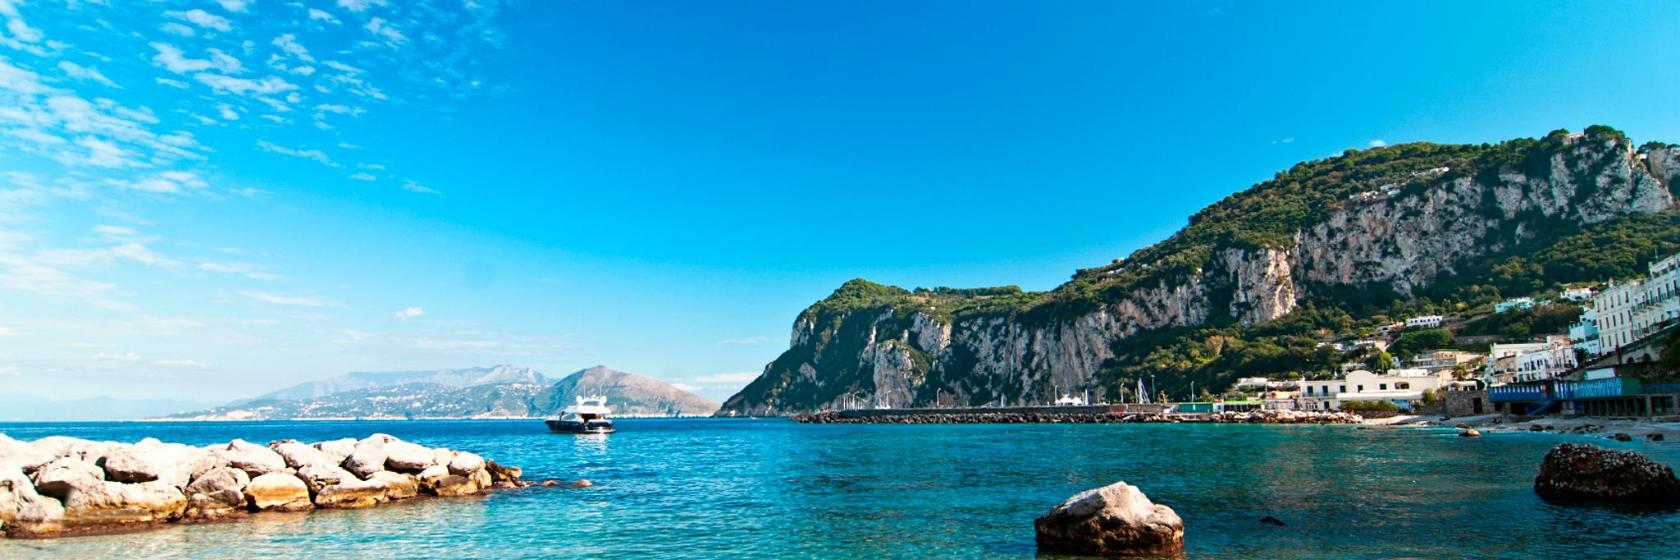 The 10 Best Capri Island Hotels - Where To Stay on Capri Island, Italy